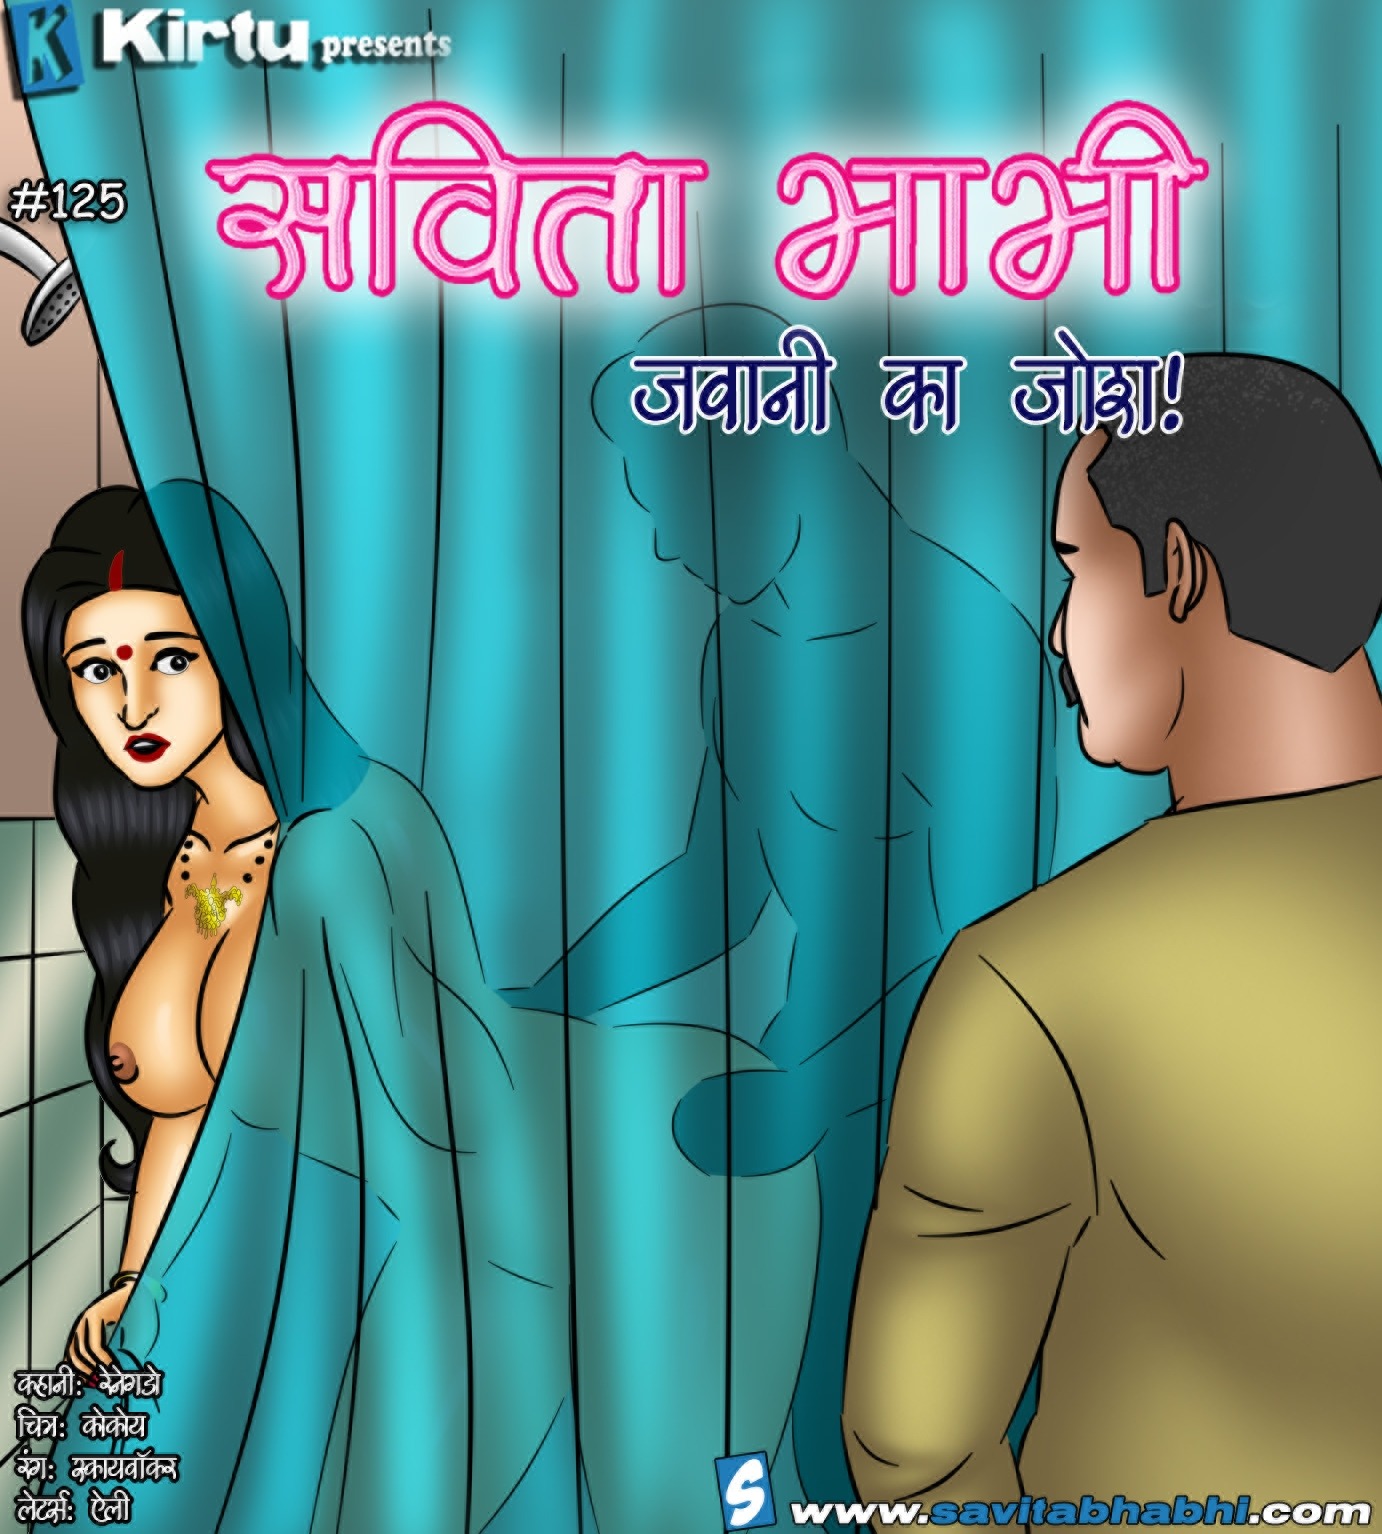 Savita bhabhi in hindi comics